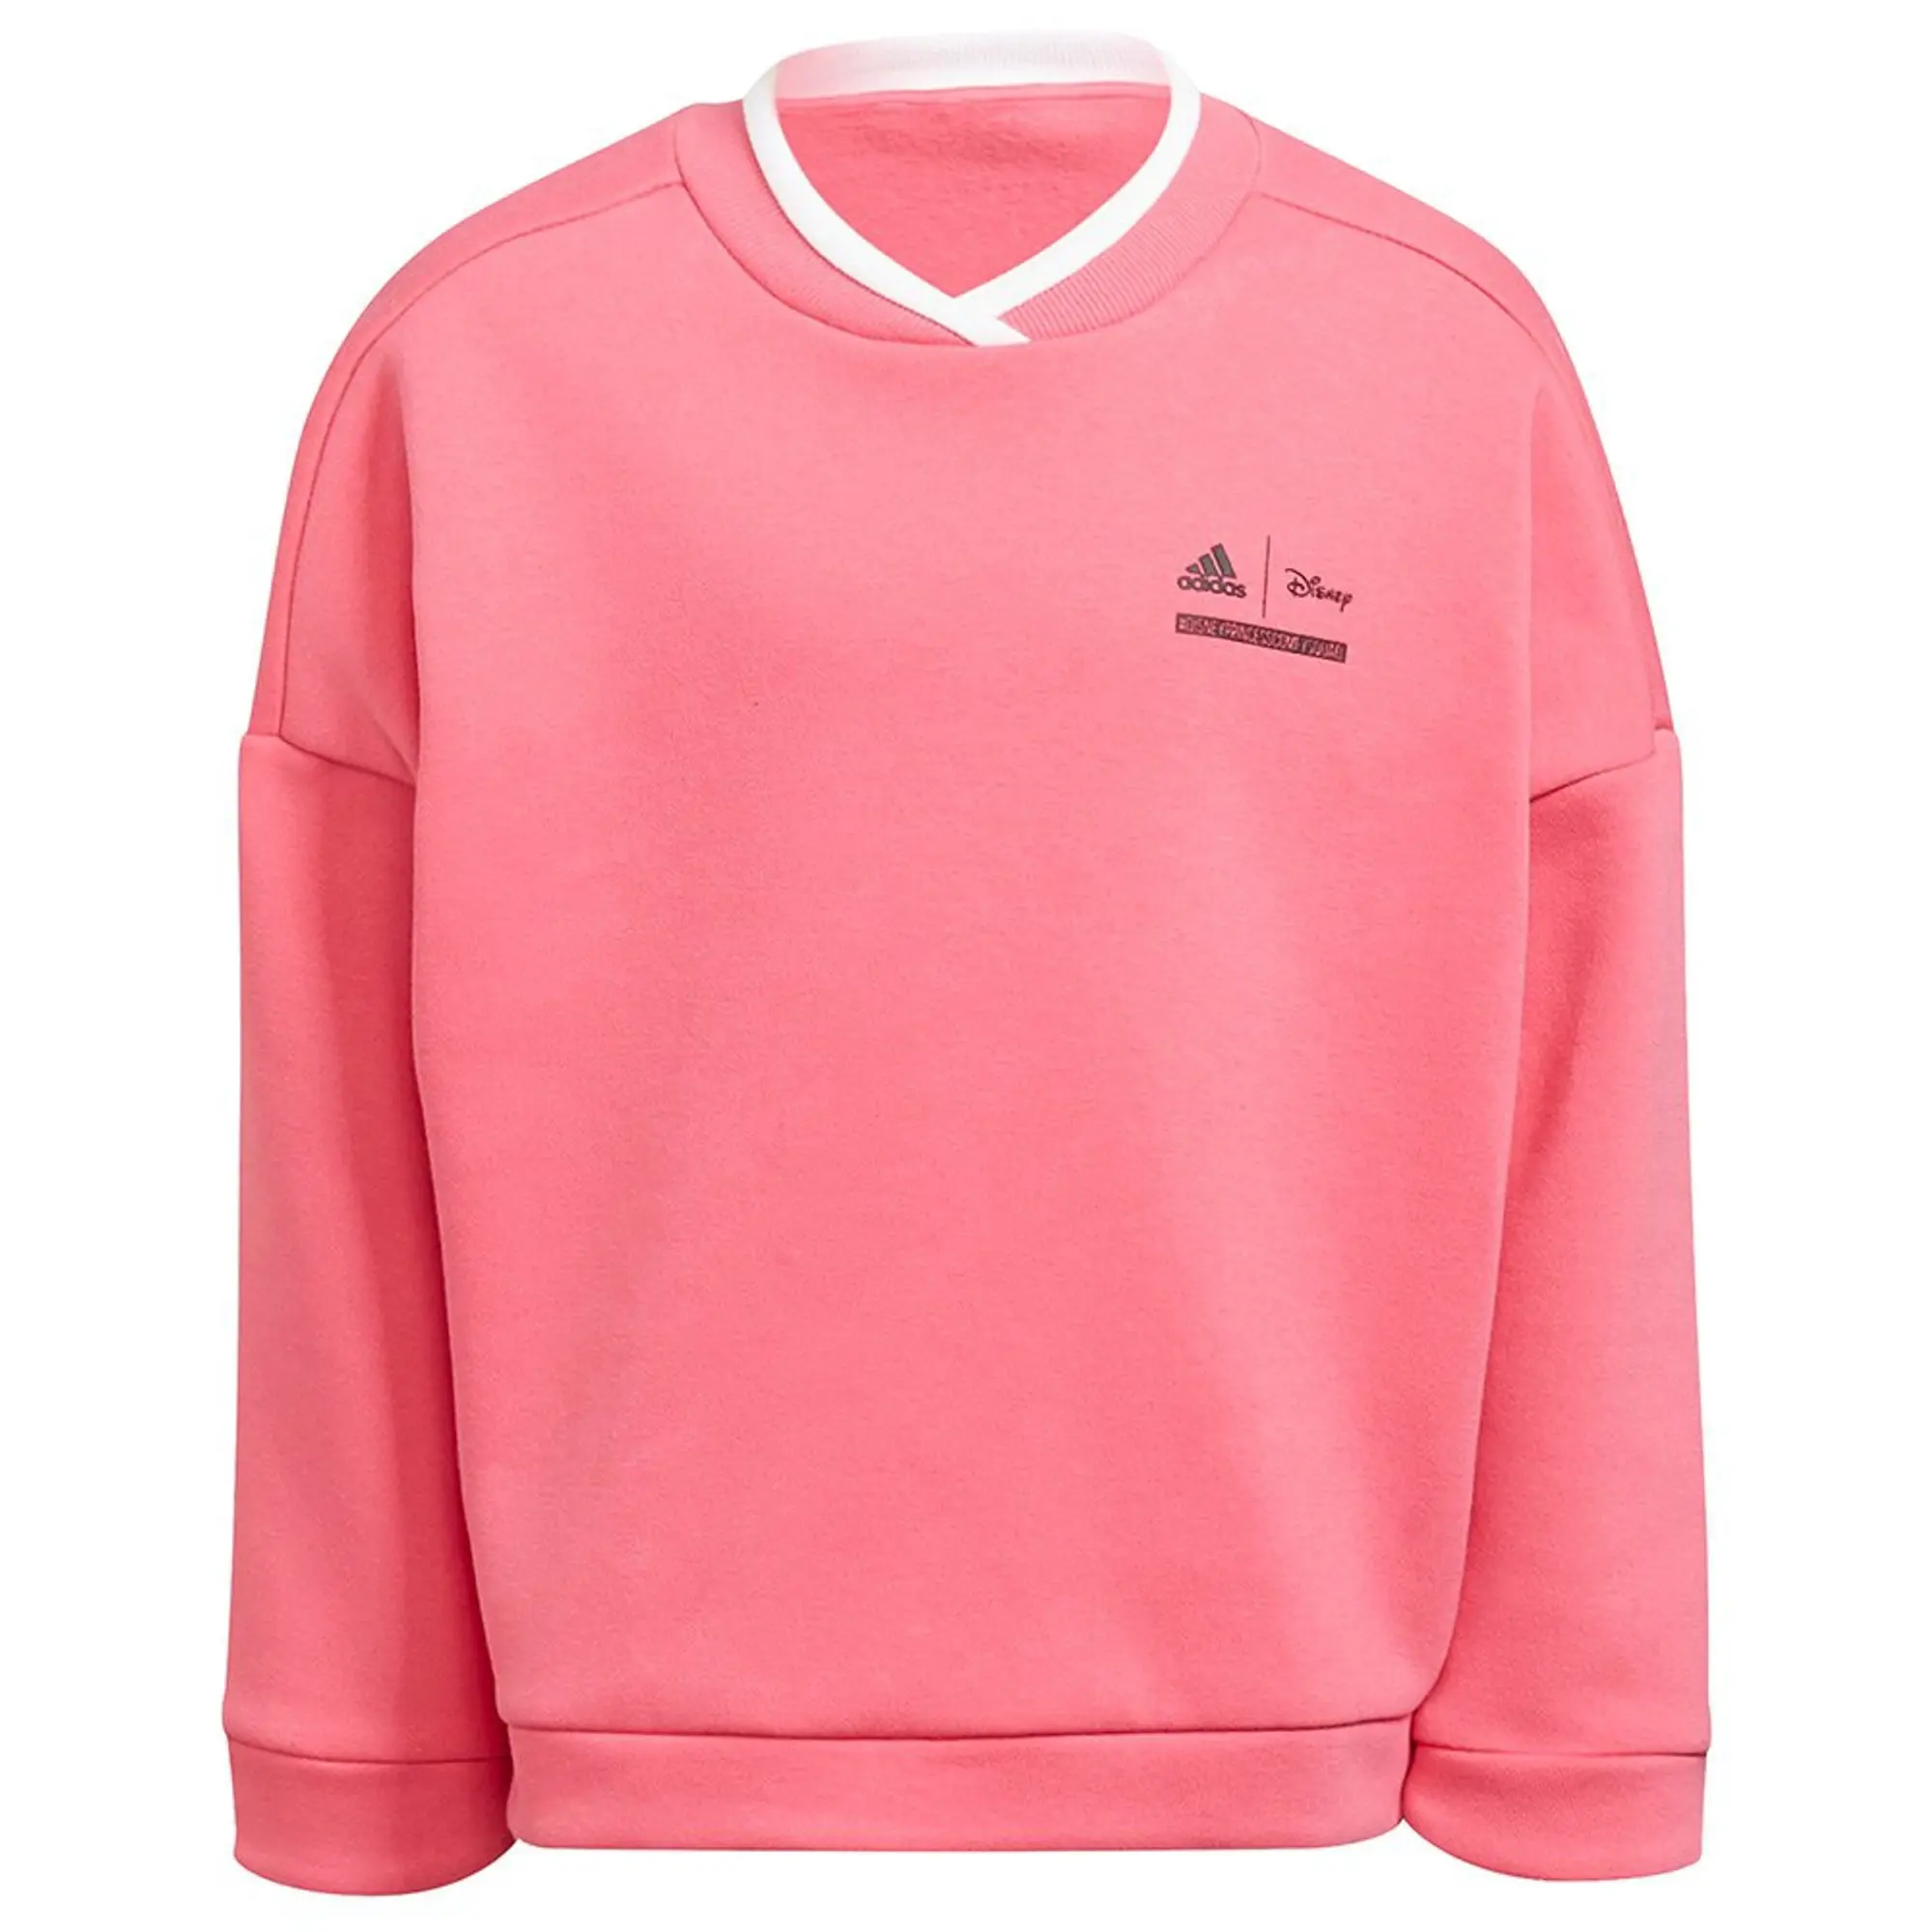 adidas Disney Comfy Princesses Crew Sweatshirt - Pink/Black, Pink/Black